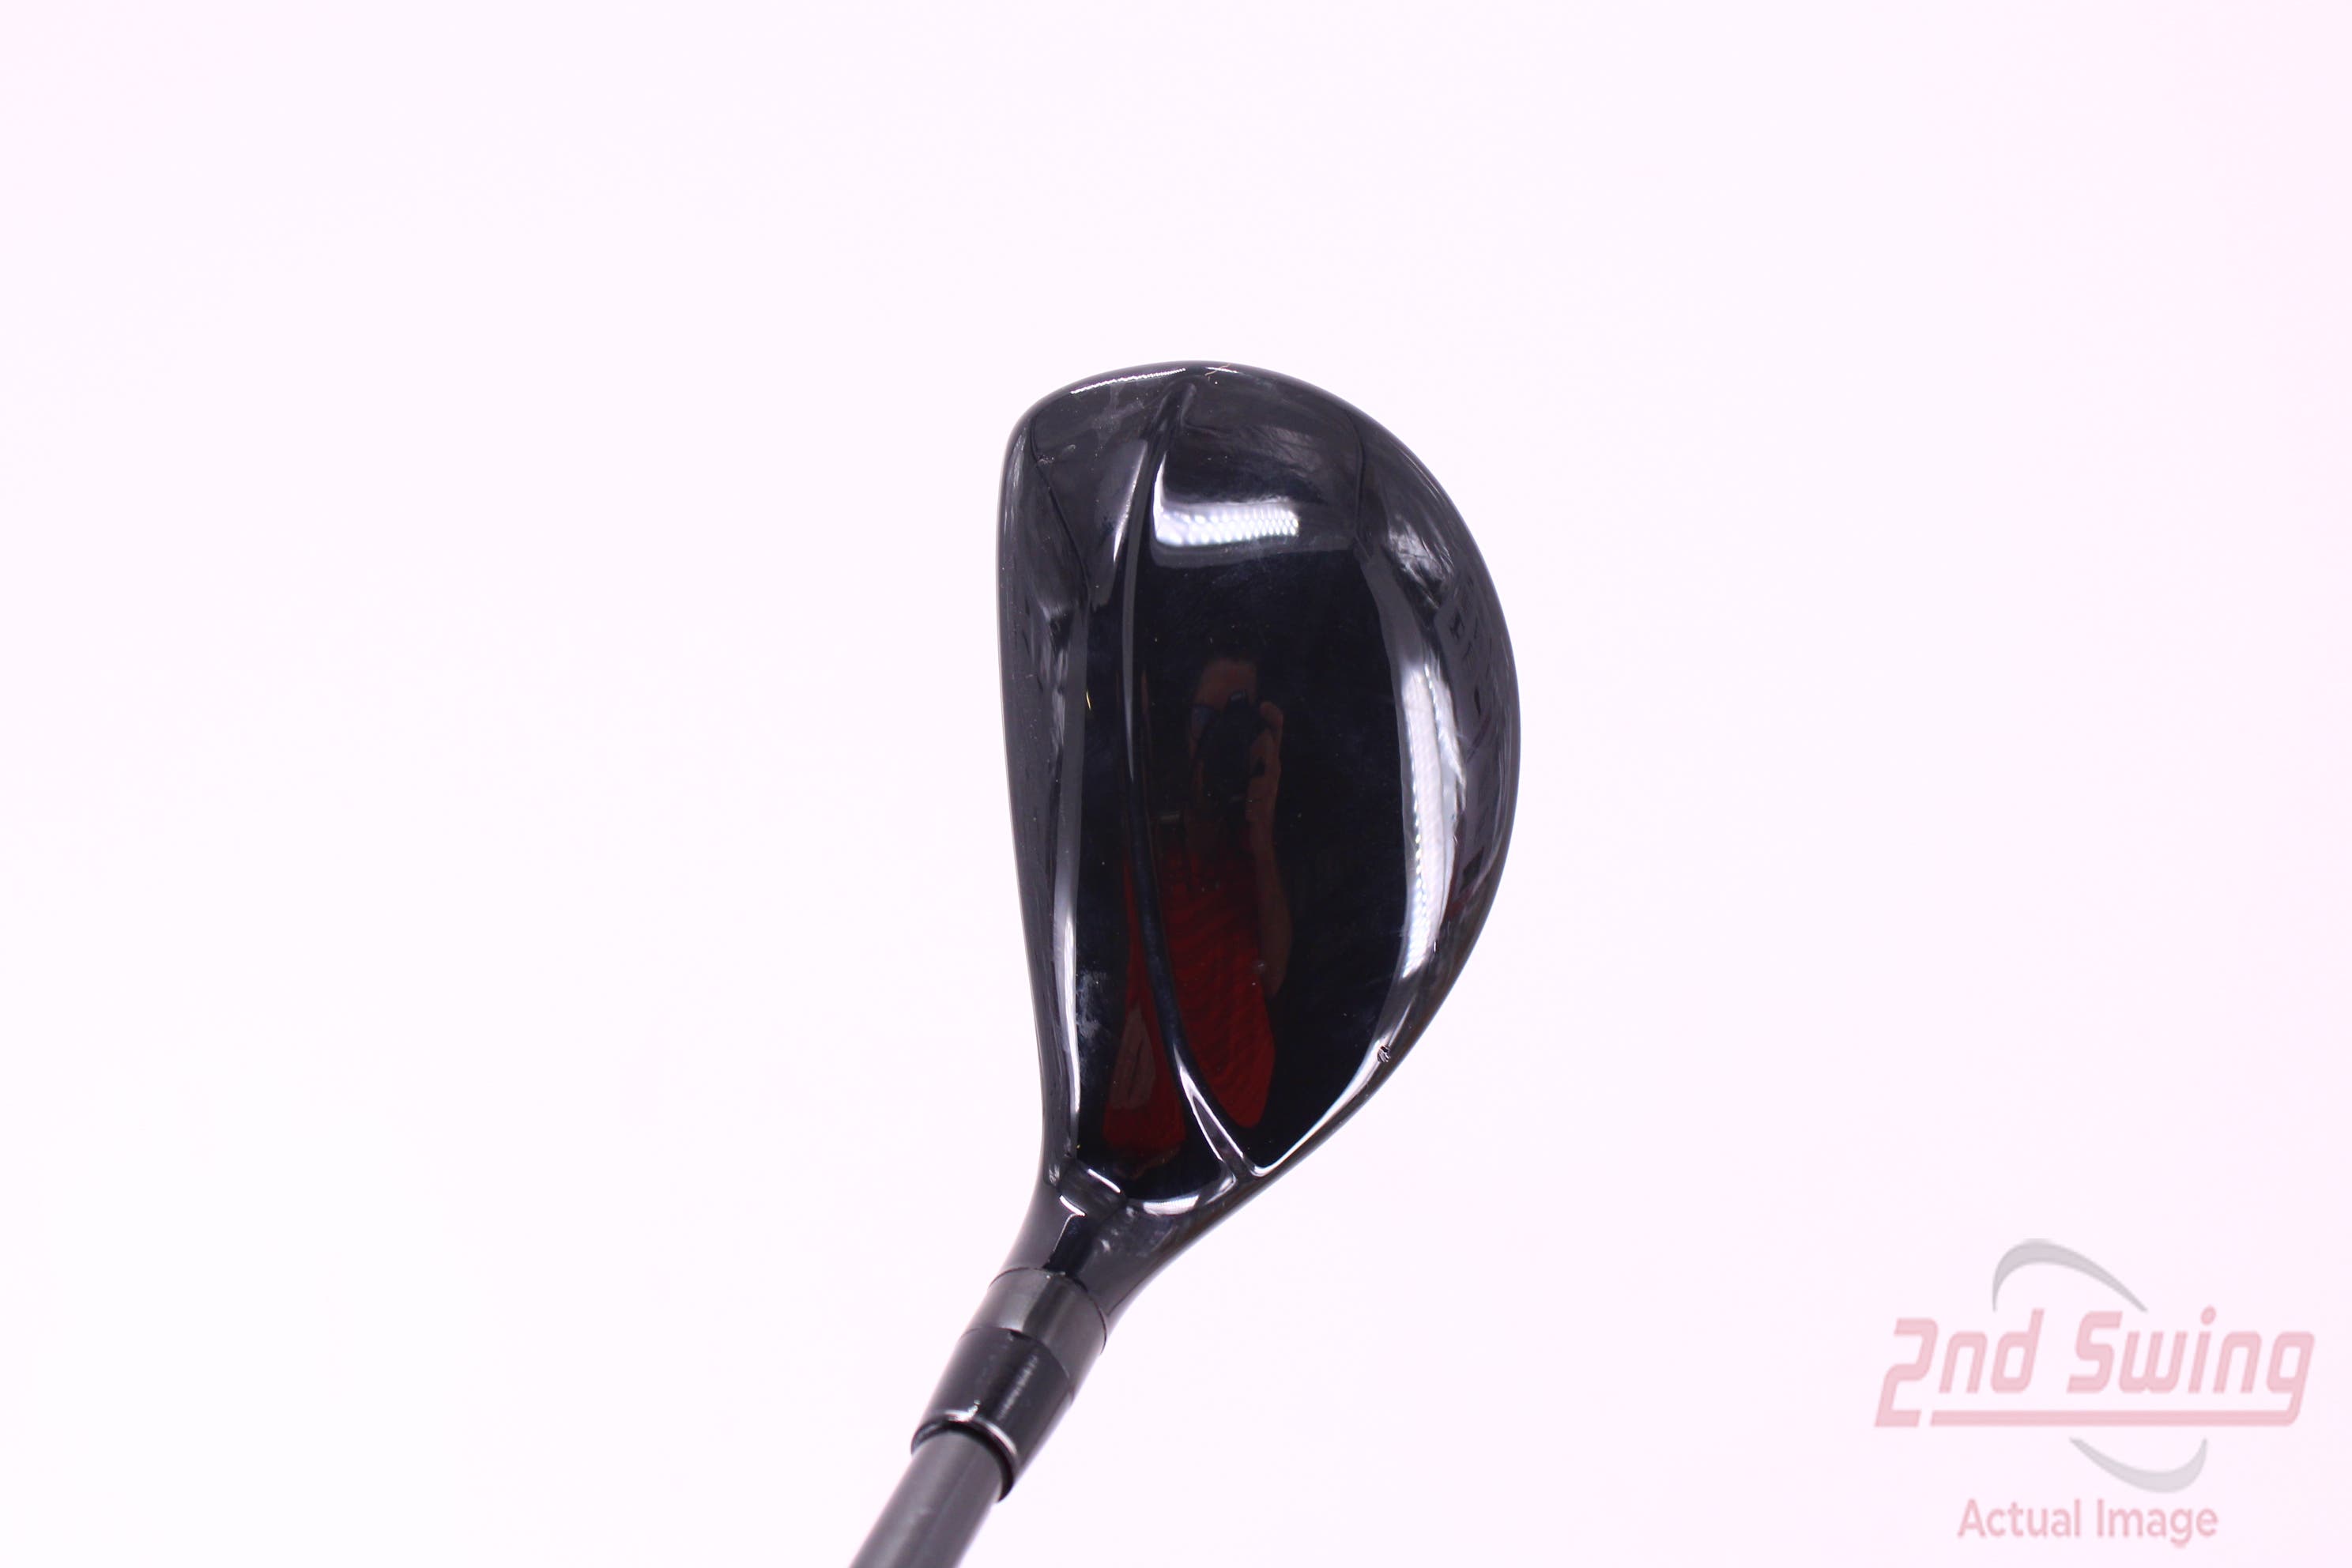 Srixon ZX Hybrid (D-82225226655) | 2nd Swing Golf